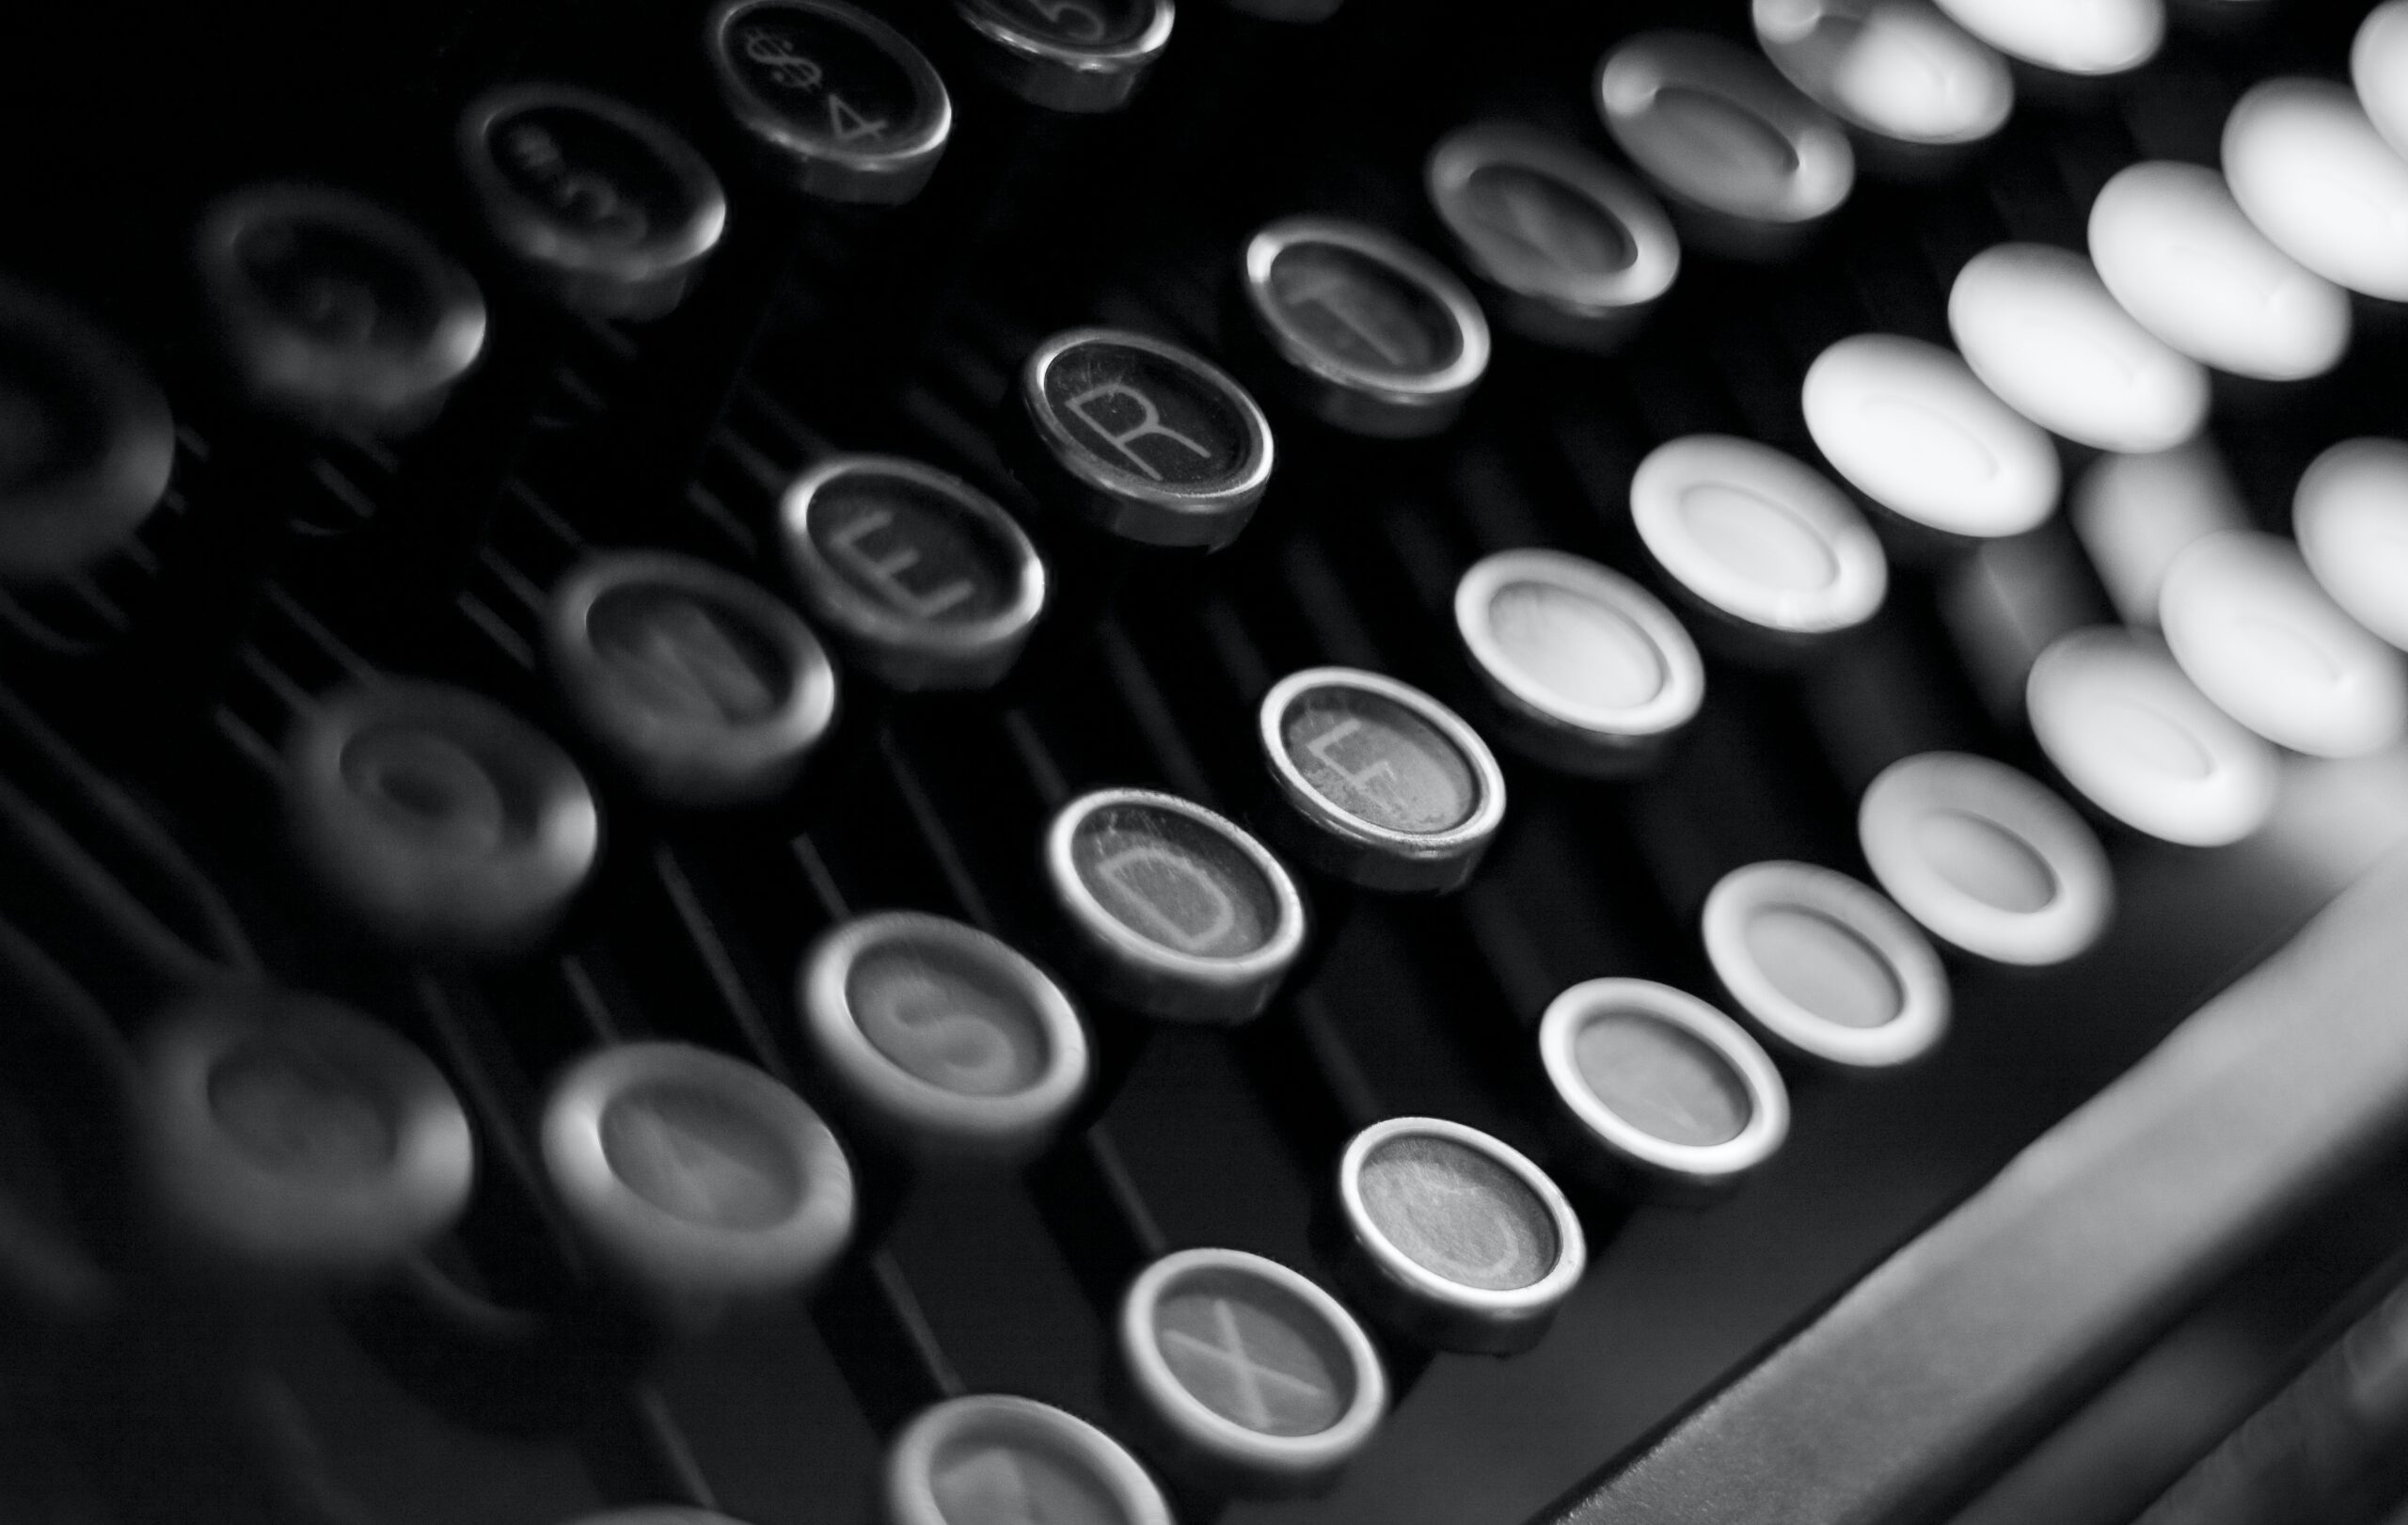 Vintage type writer keys